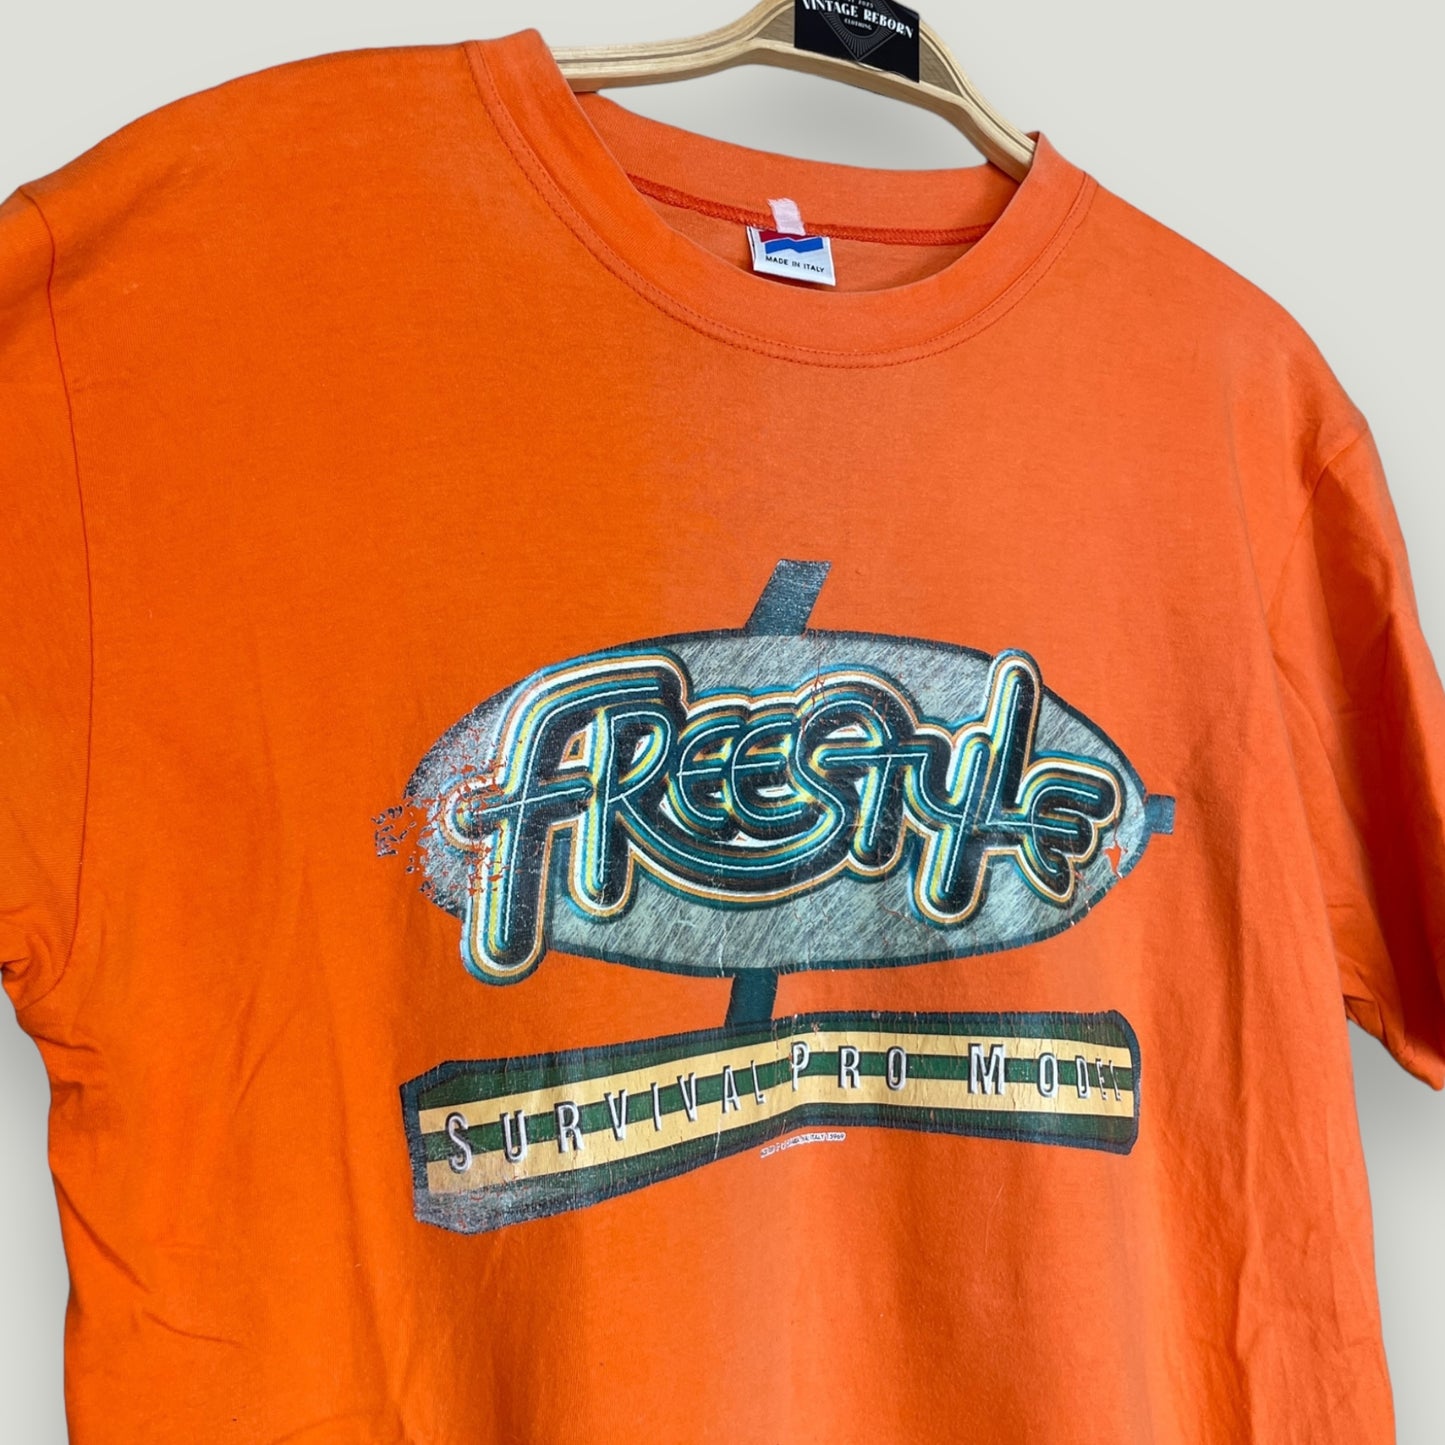 Freestyle Tshirt - Vintage Reborn